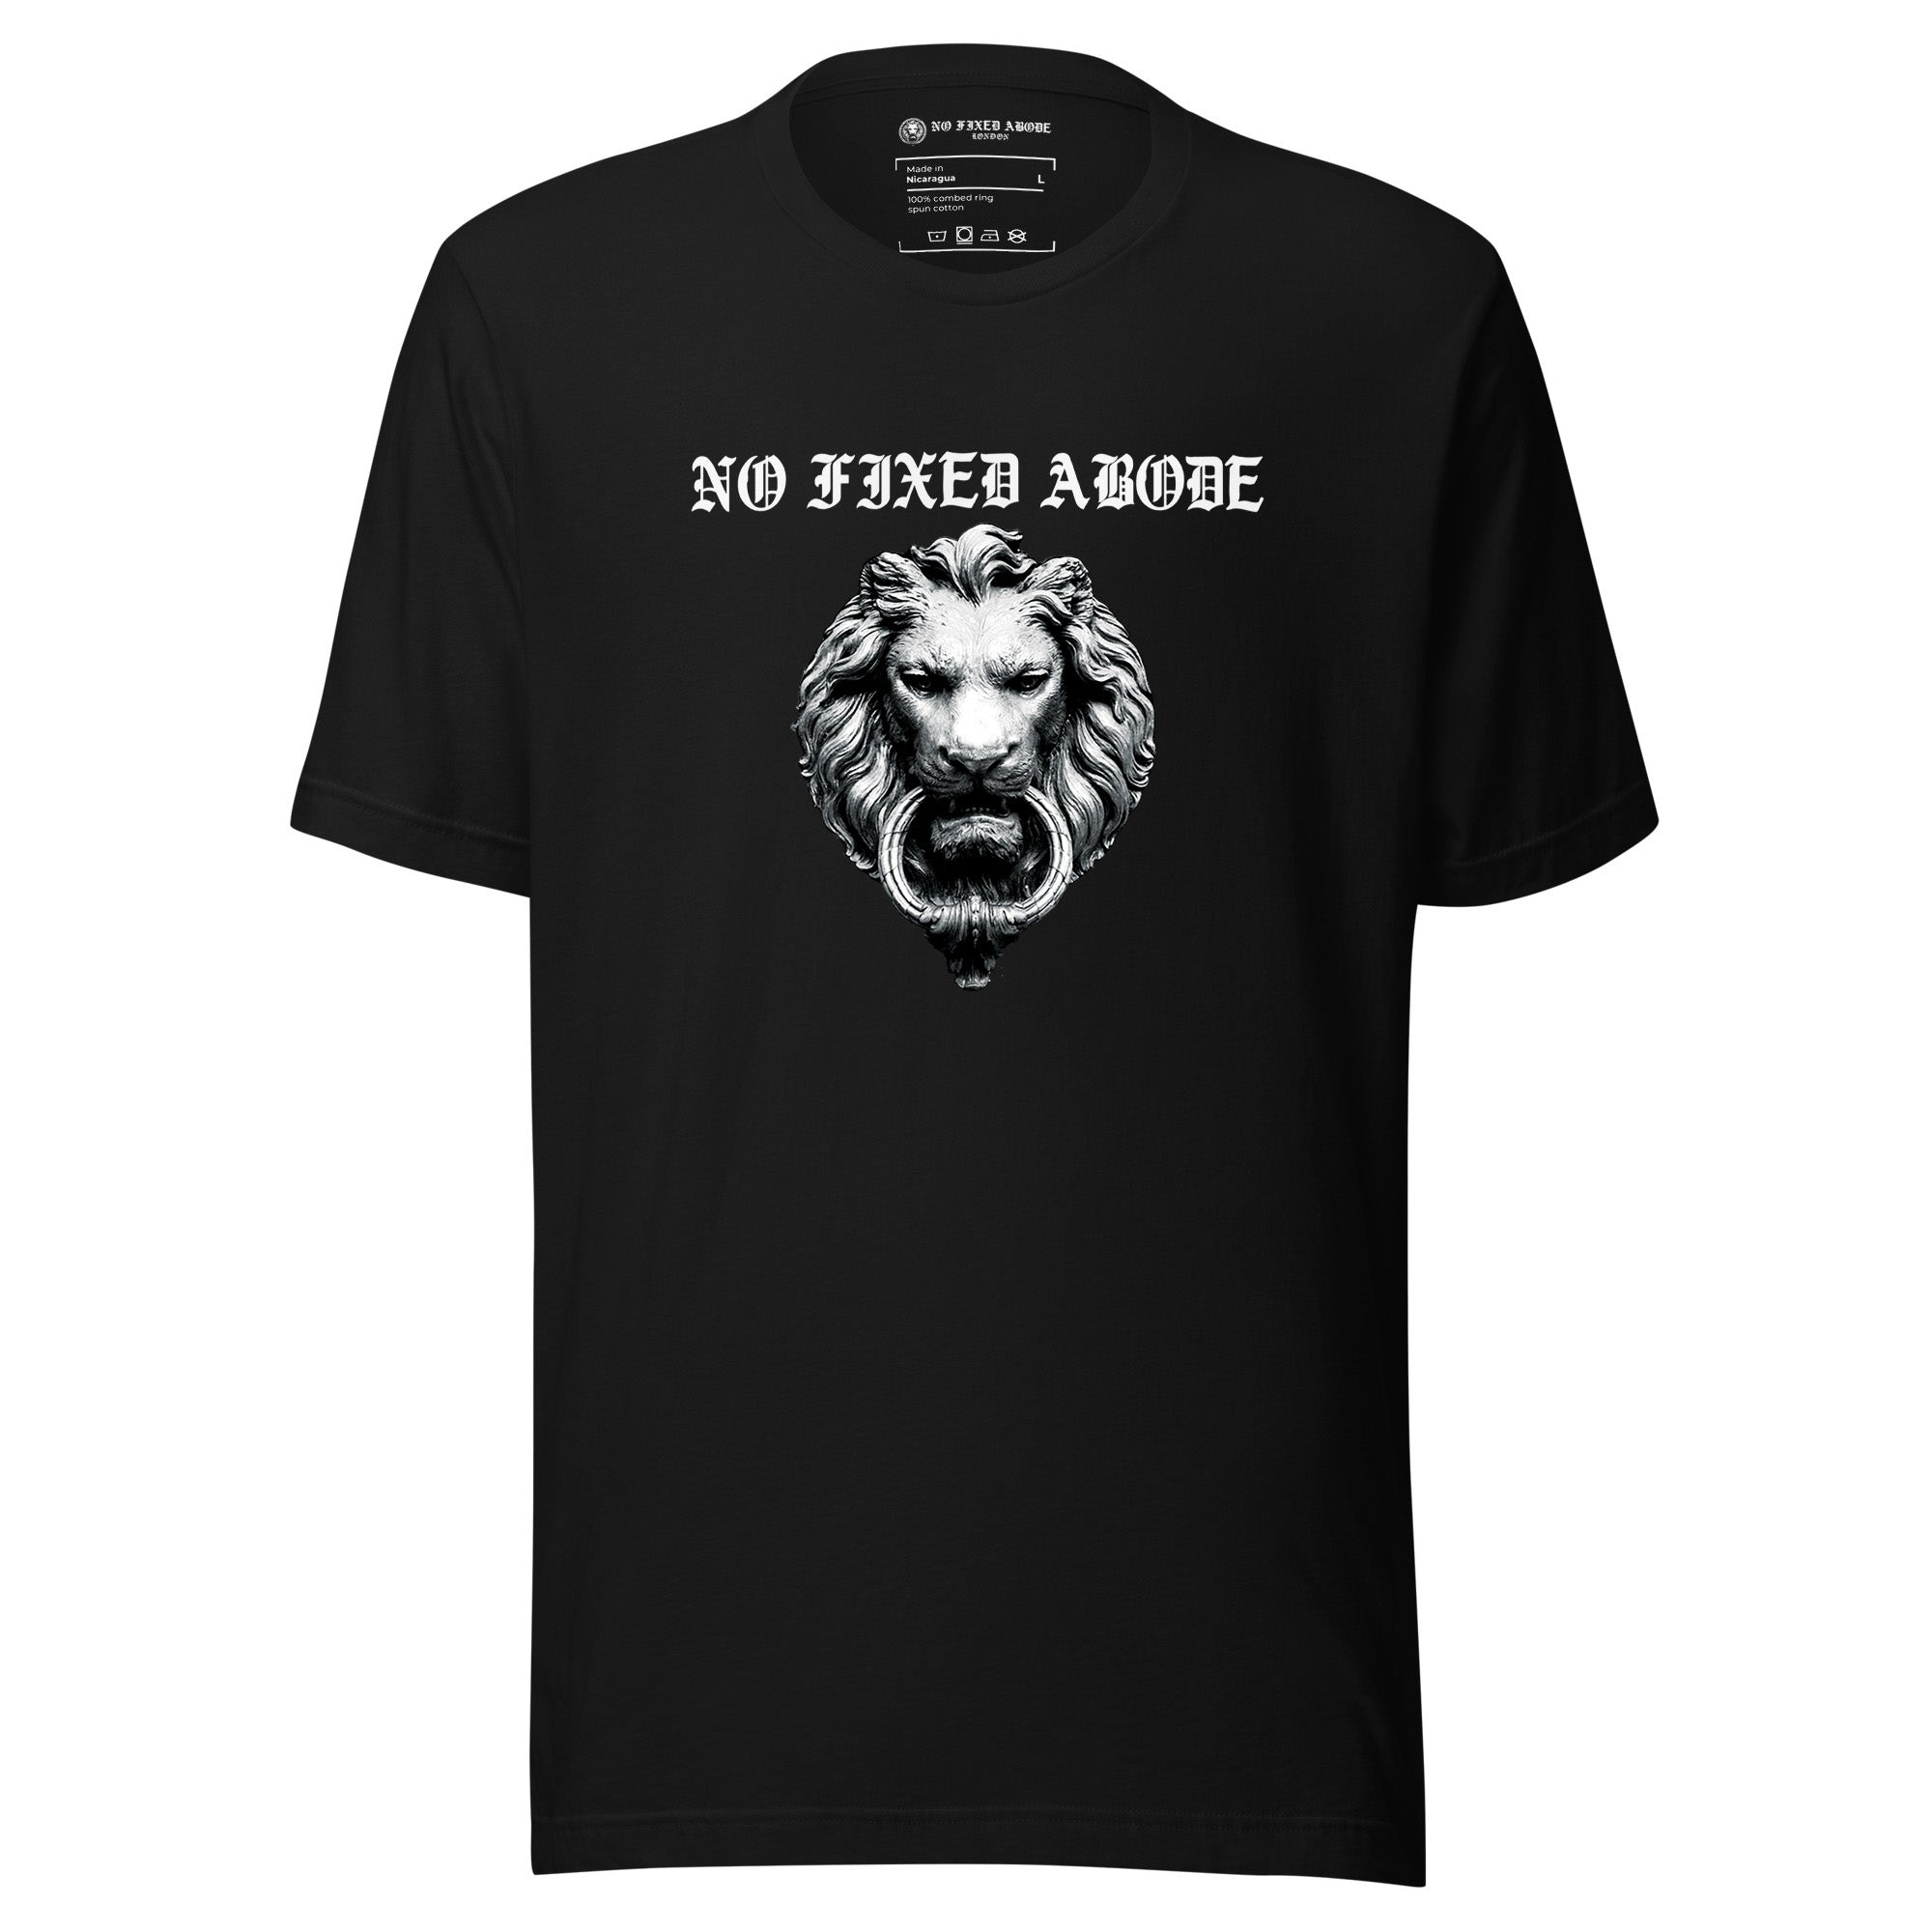 Lion head t-shirt